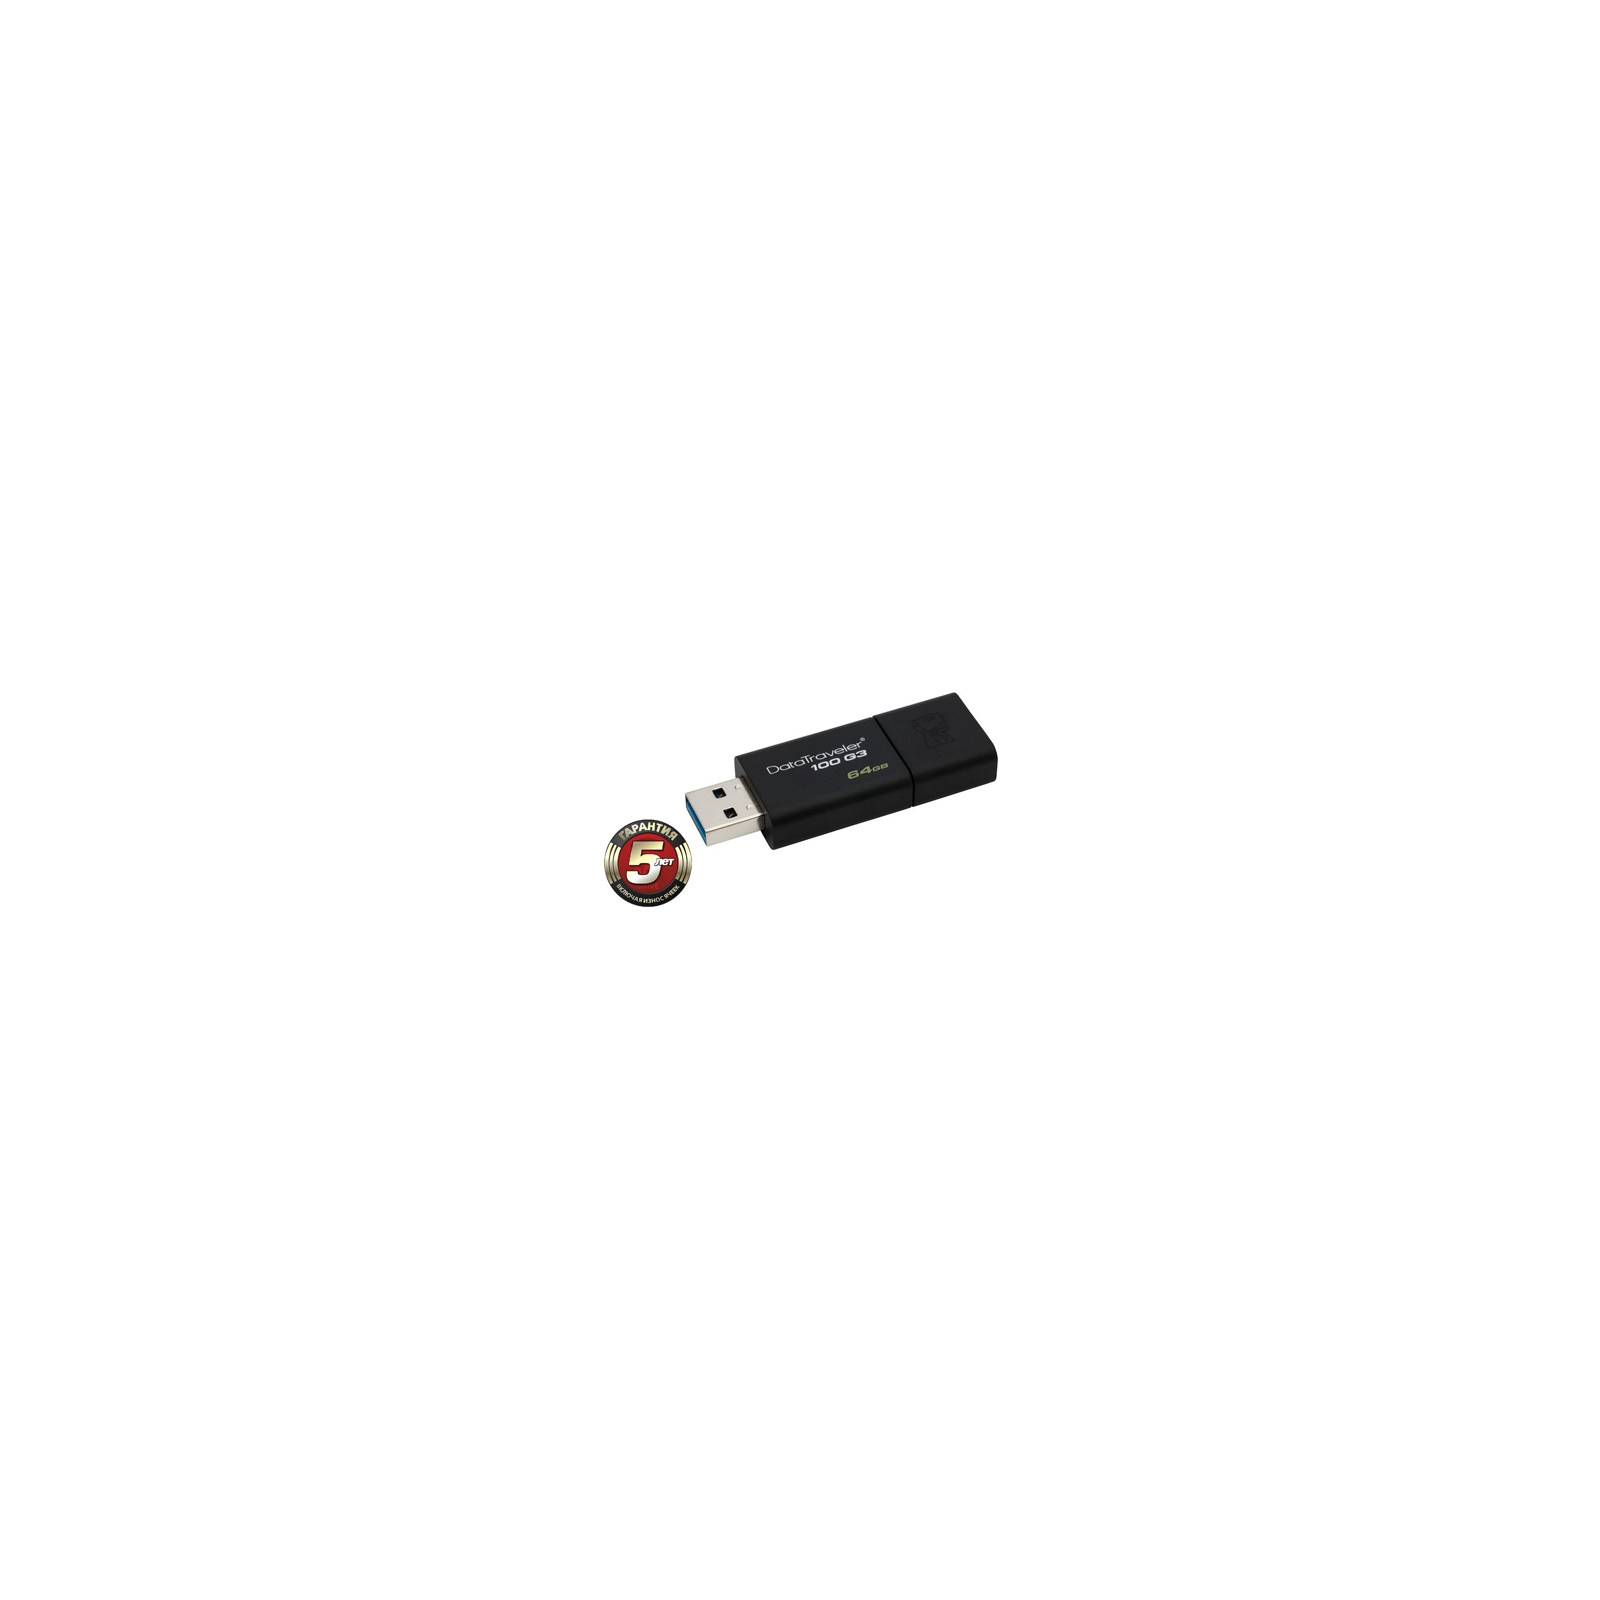 USB флеш накопичувач Kingston 128GB DT100 G3 Black USB 3.0 (DT100G3/128GB) зображення 2